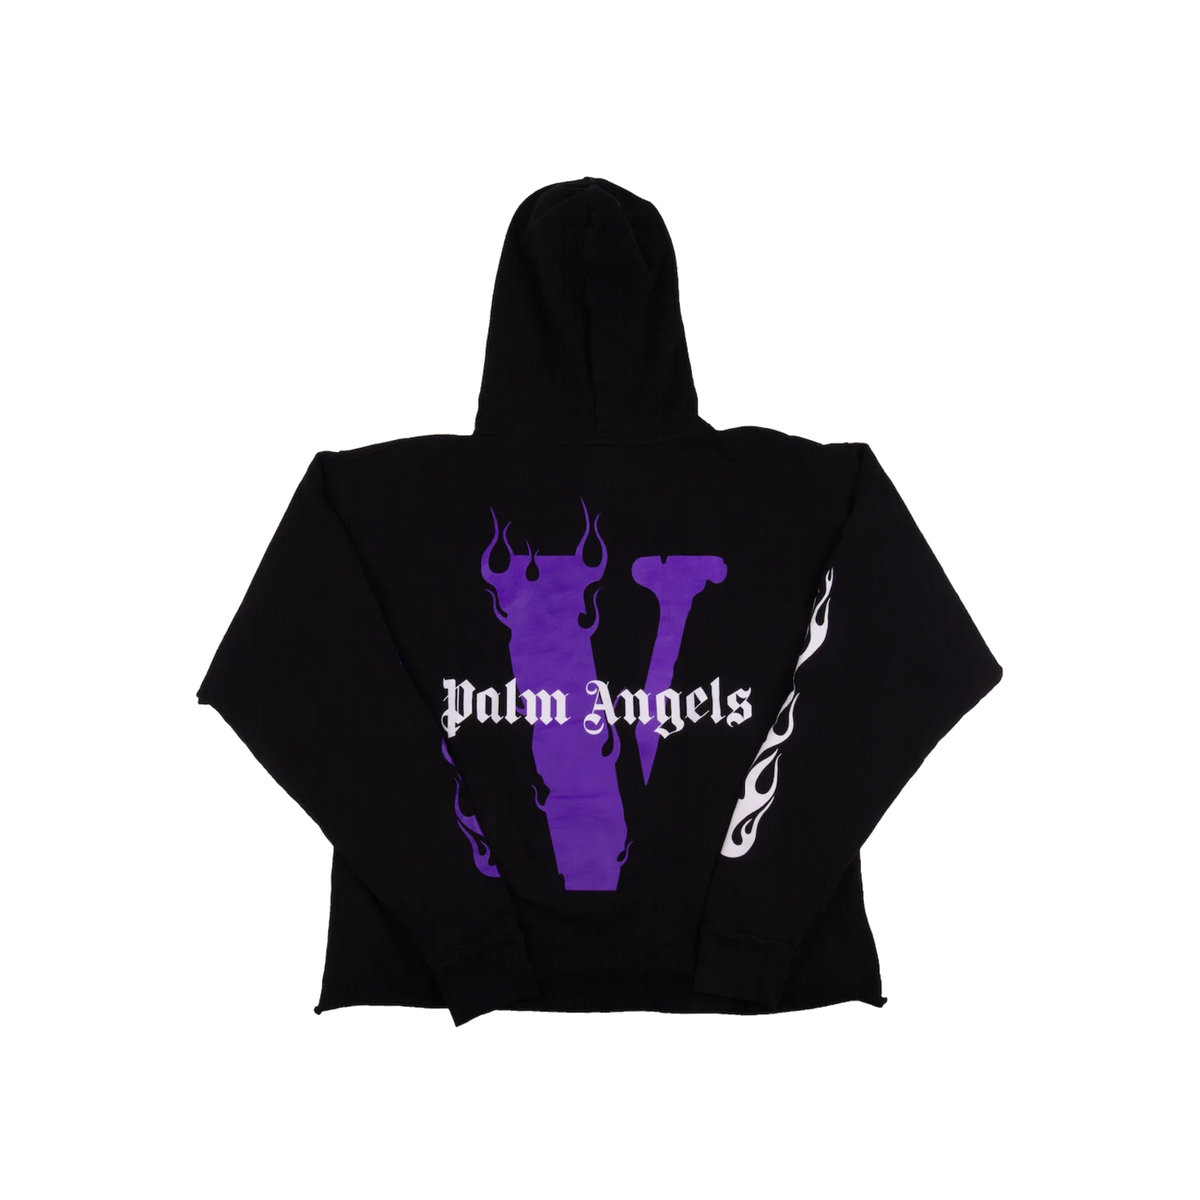 Vlone x Palm Angels Purple T-shirt Size Large - Free Same-Day